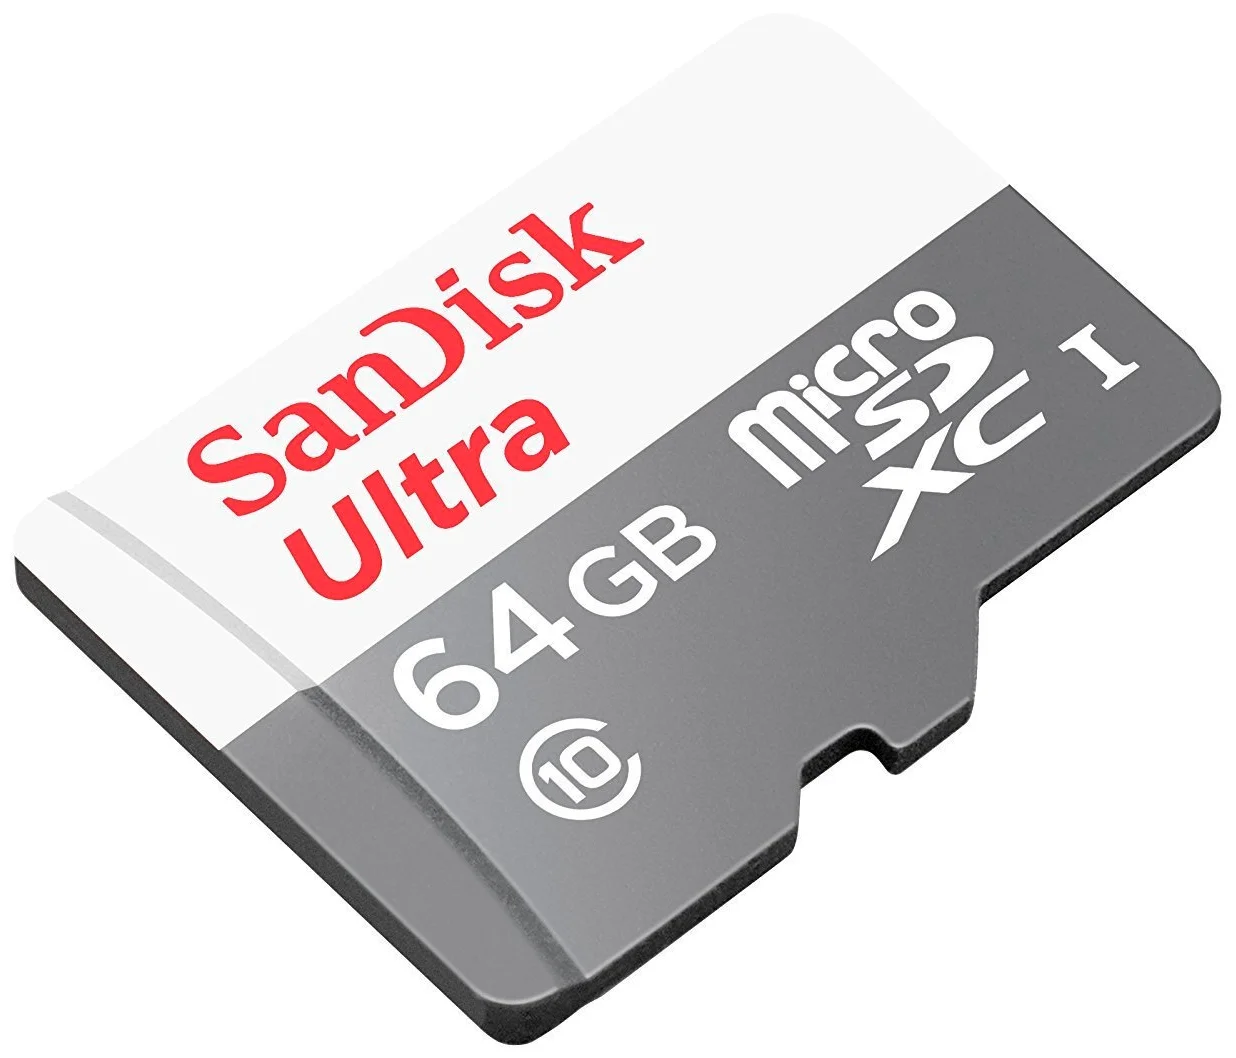 SanDisk Ultra microSDXC Class 10 UHS-I 80MB/s - скорость чтения данных: 80 МБ/с